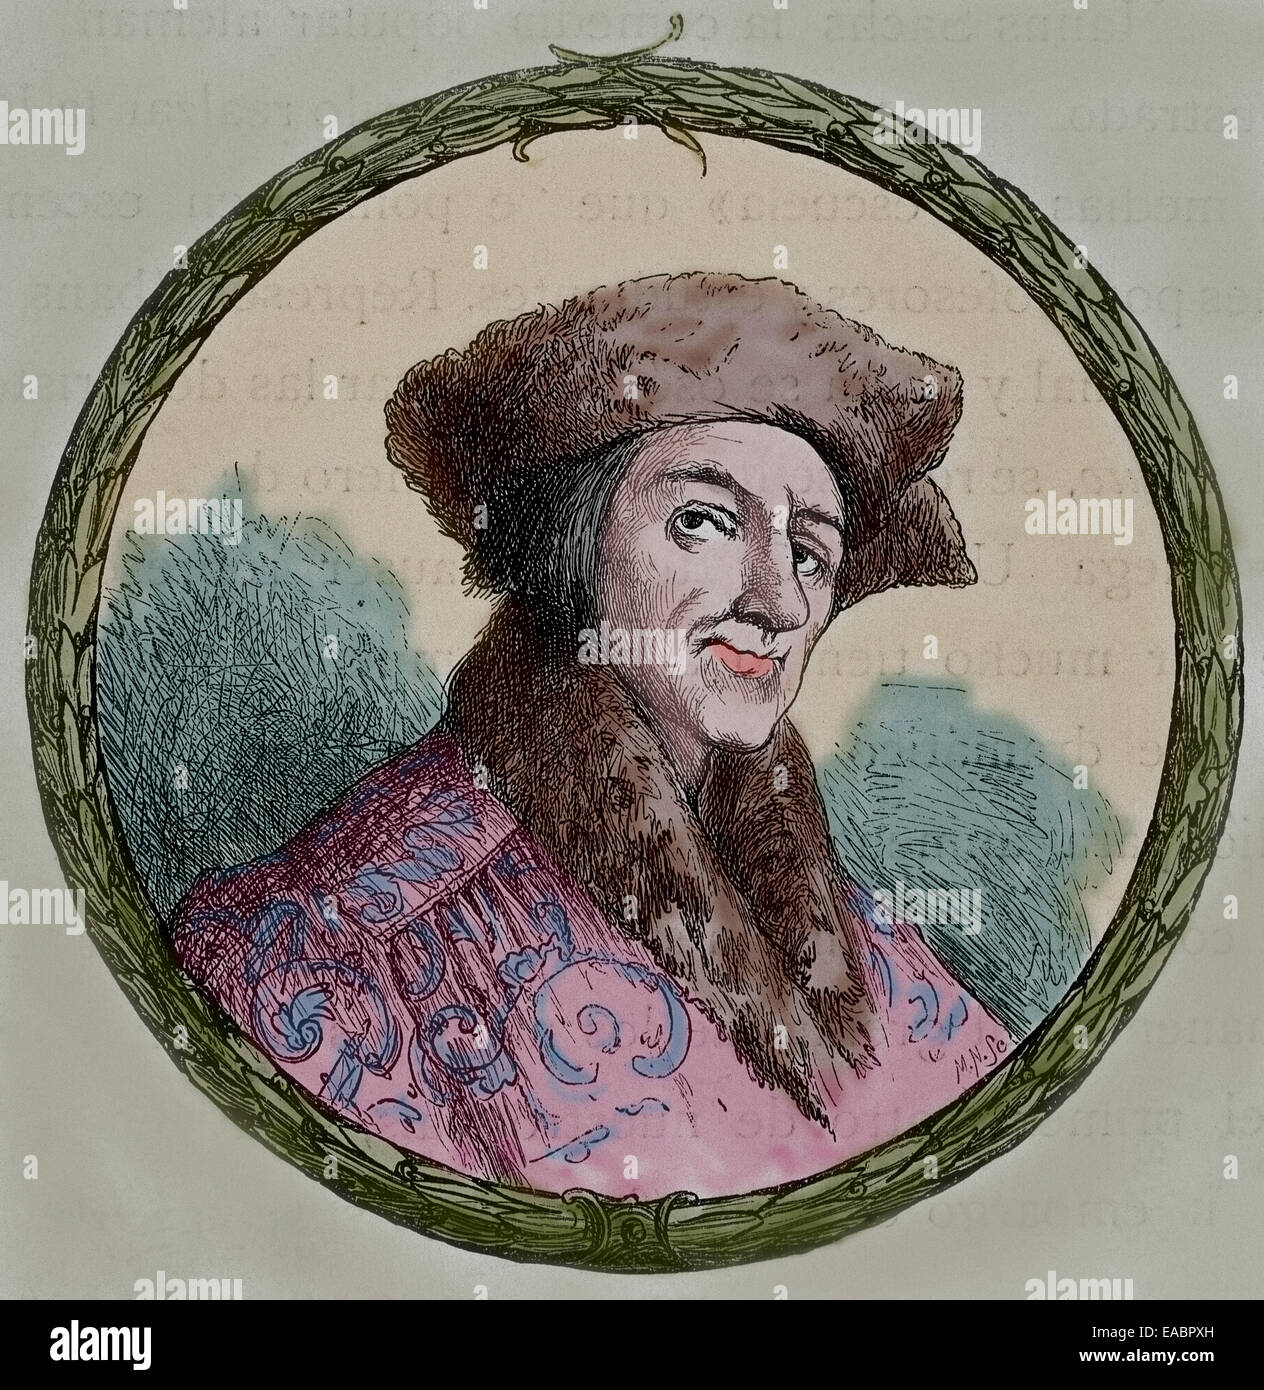 Johann Baptist Fischart (c. 1545-1591). German satirist and publicist. Portrait. Engraving. Colored. Stock Photo